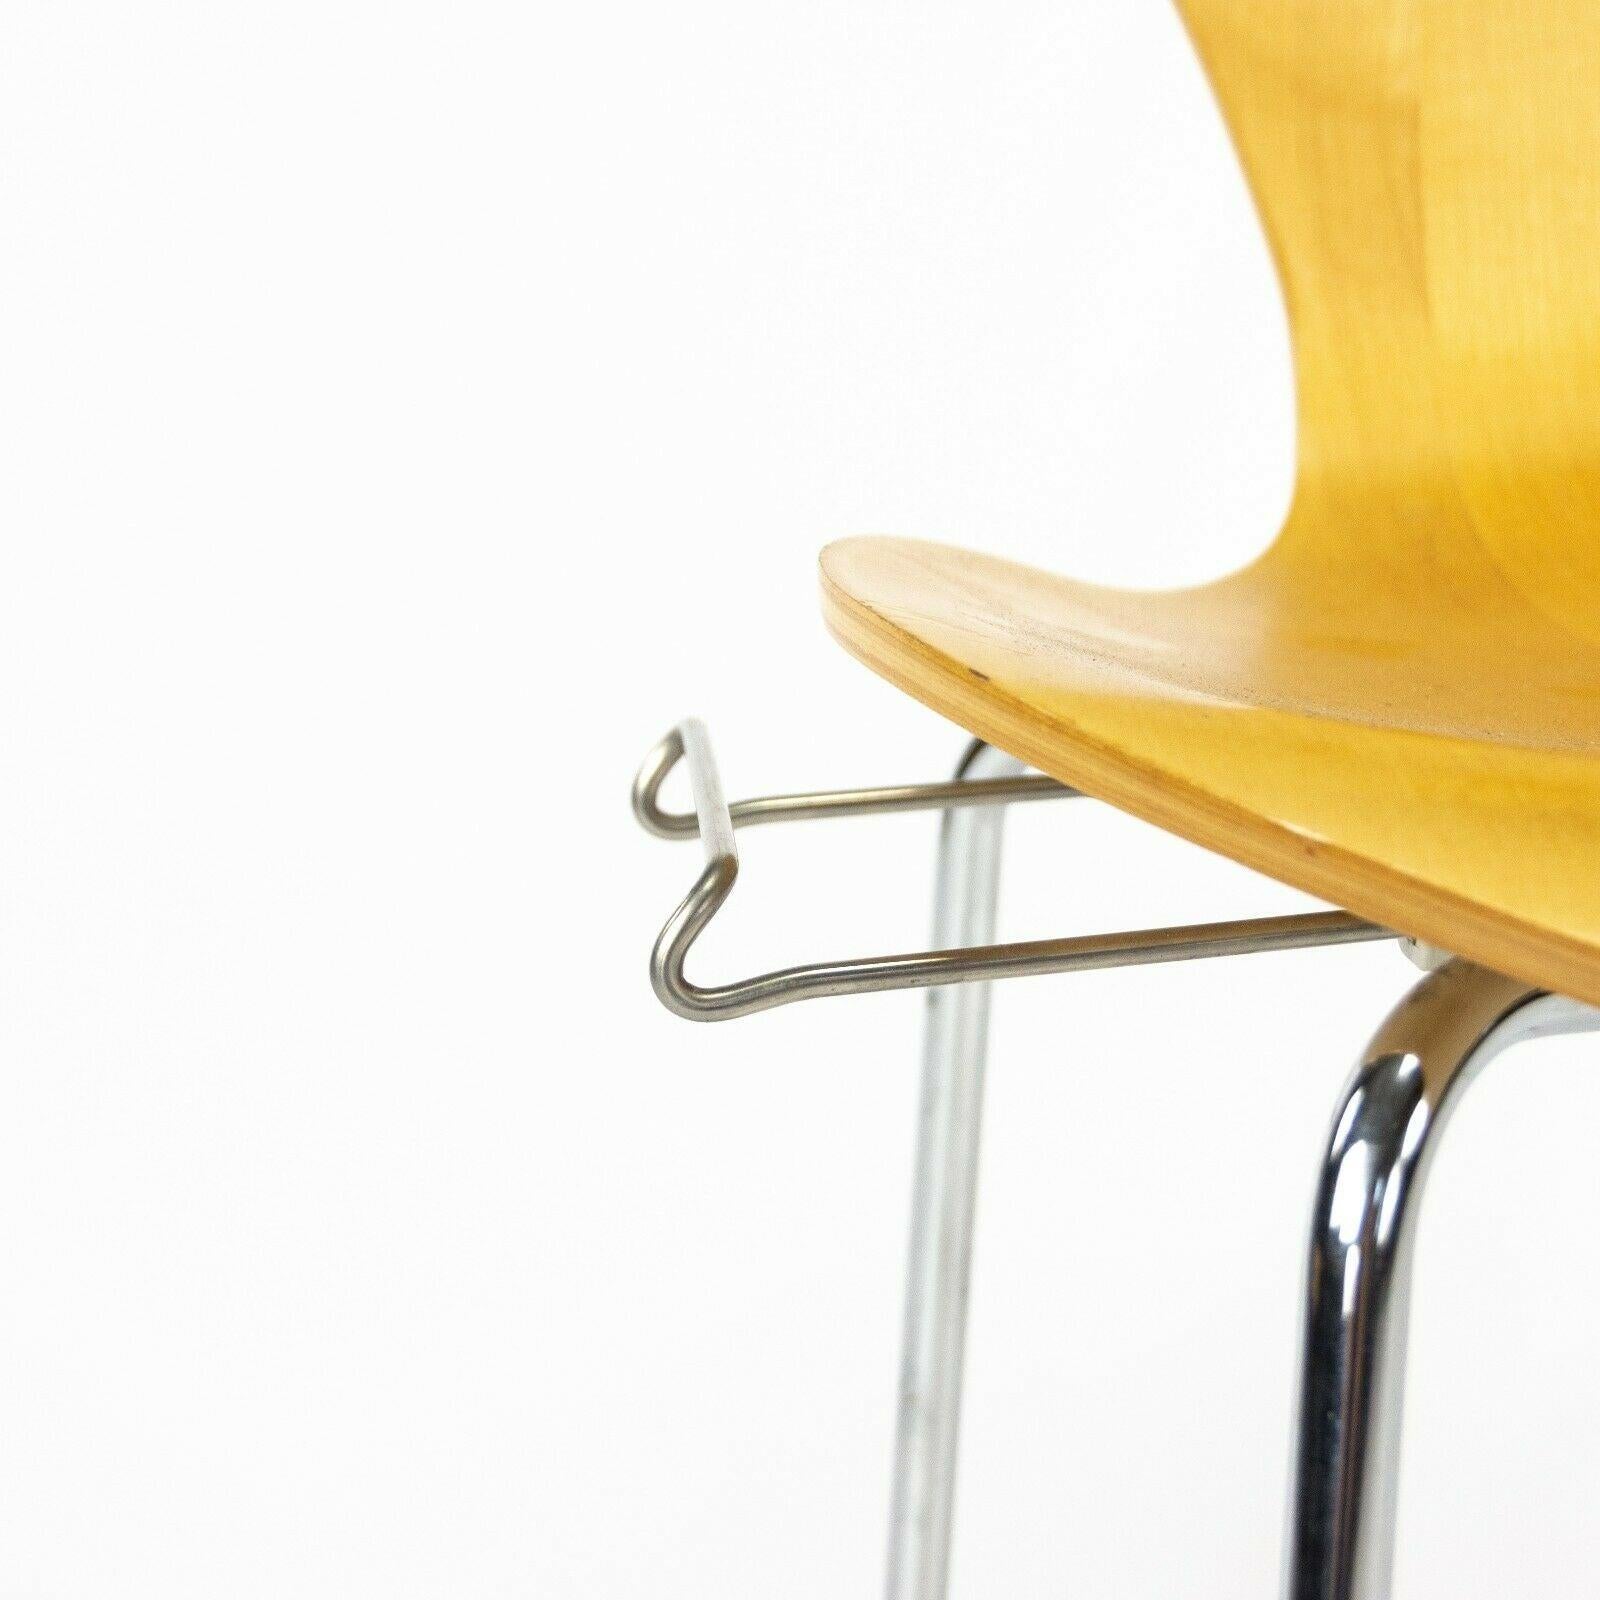 2001 Arne Jacobsen for Fritz Hansen Knoll Series 7 Stacking & Interlocking Chair For Sale 4